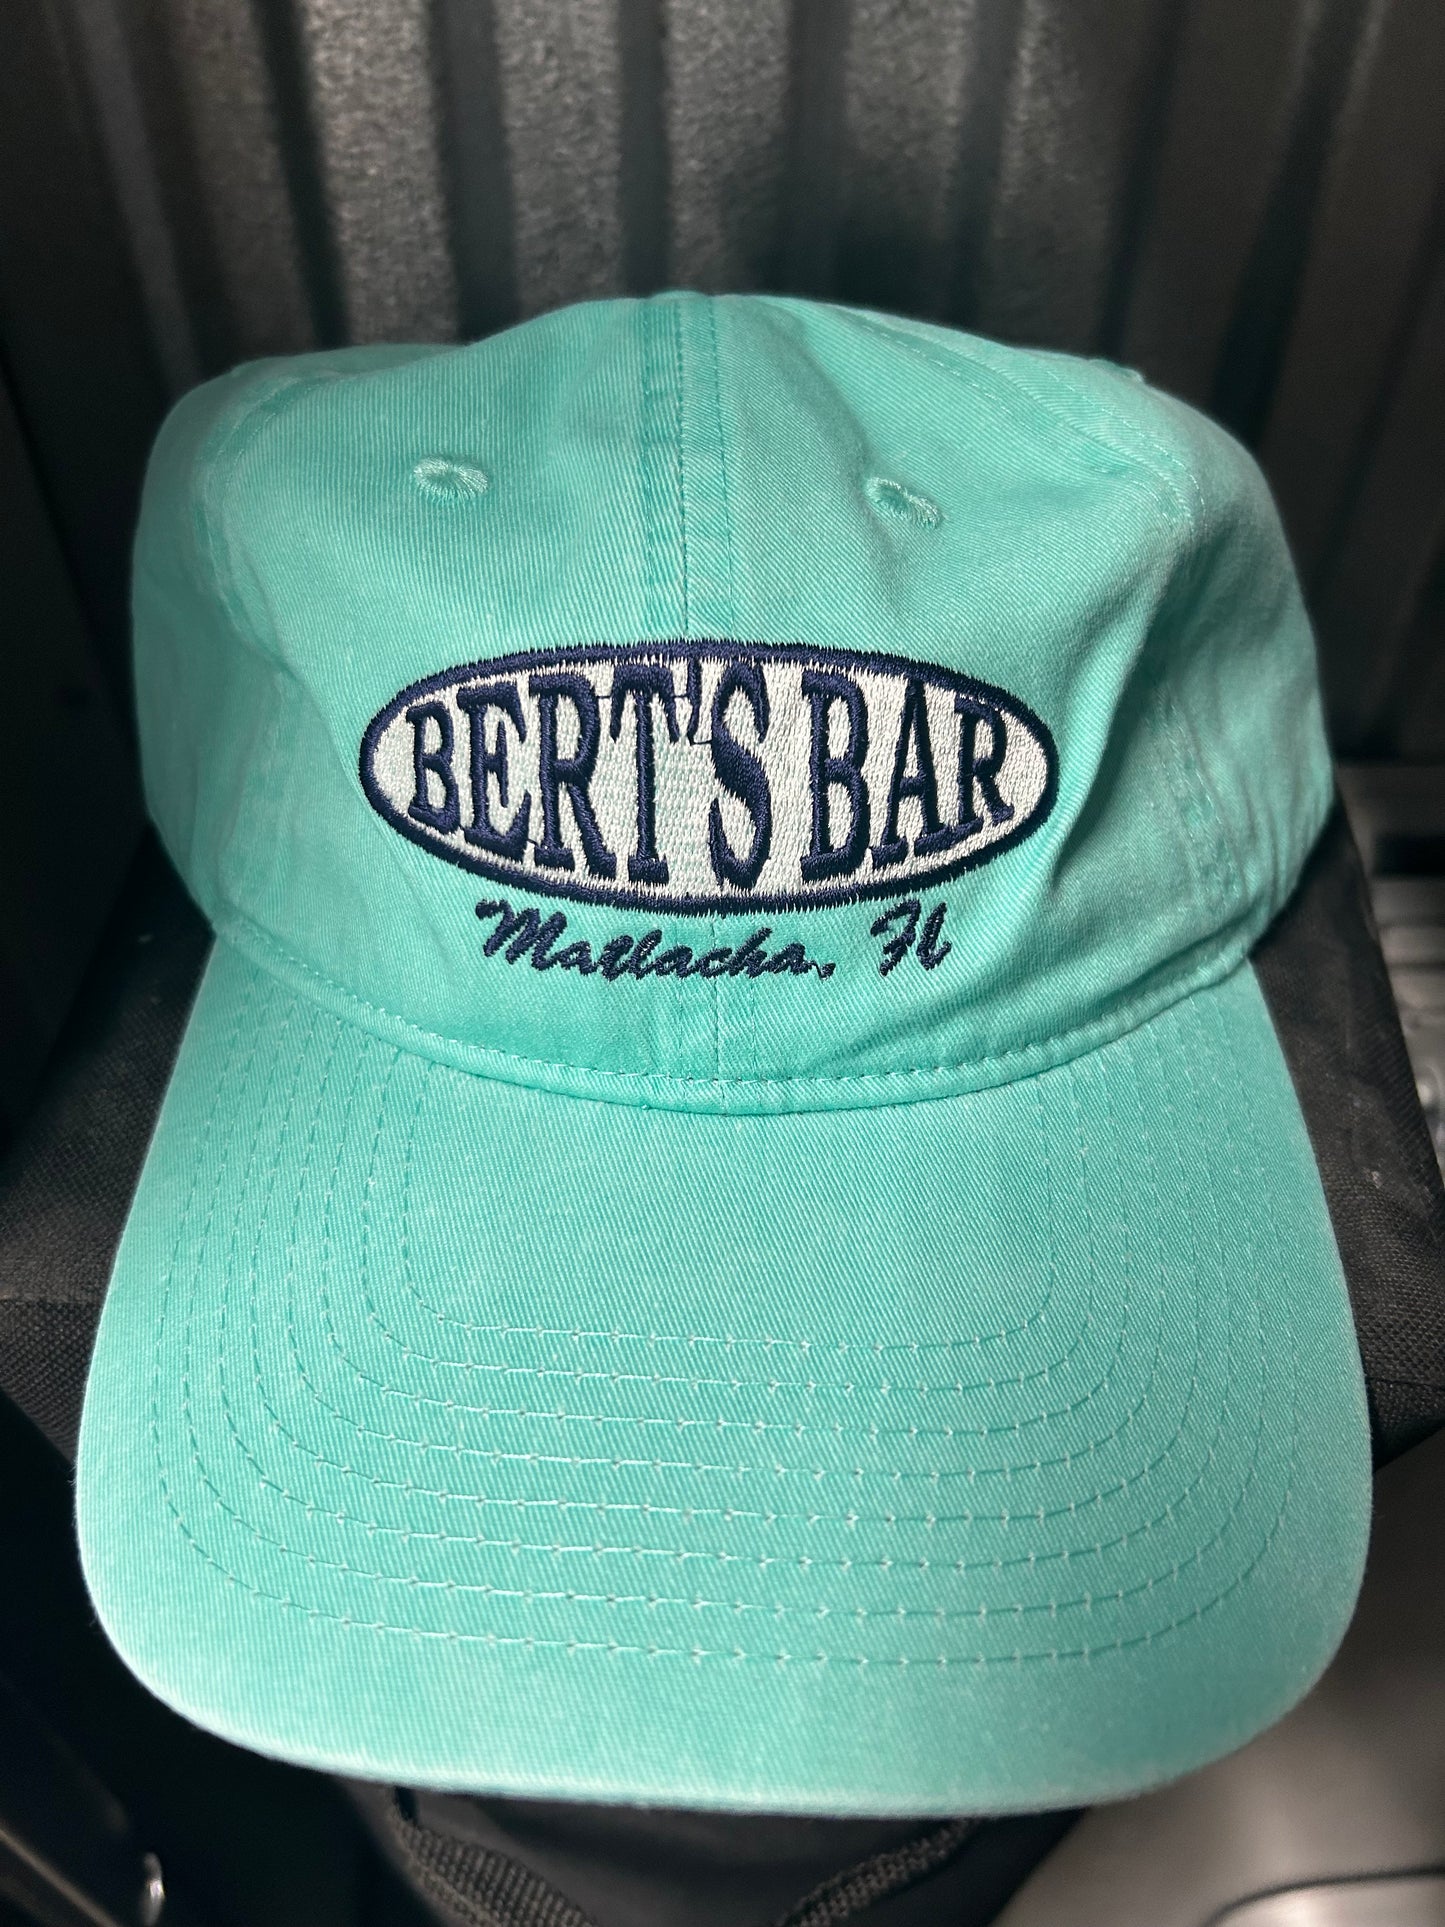 Bert's Bar Caps